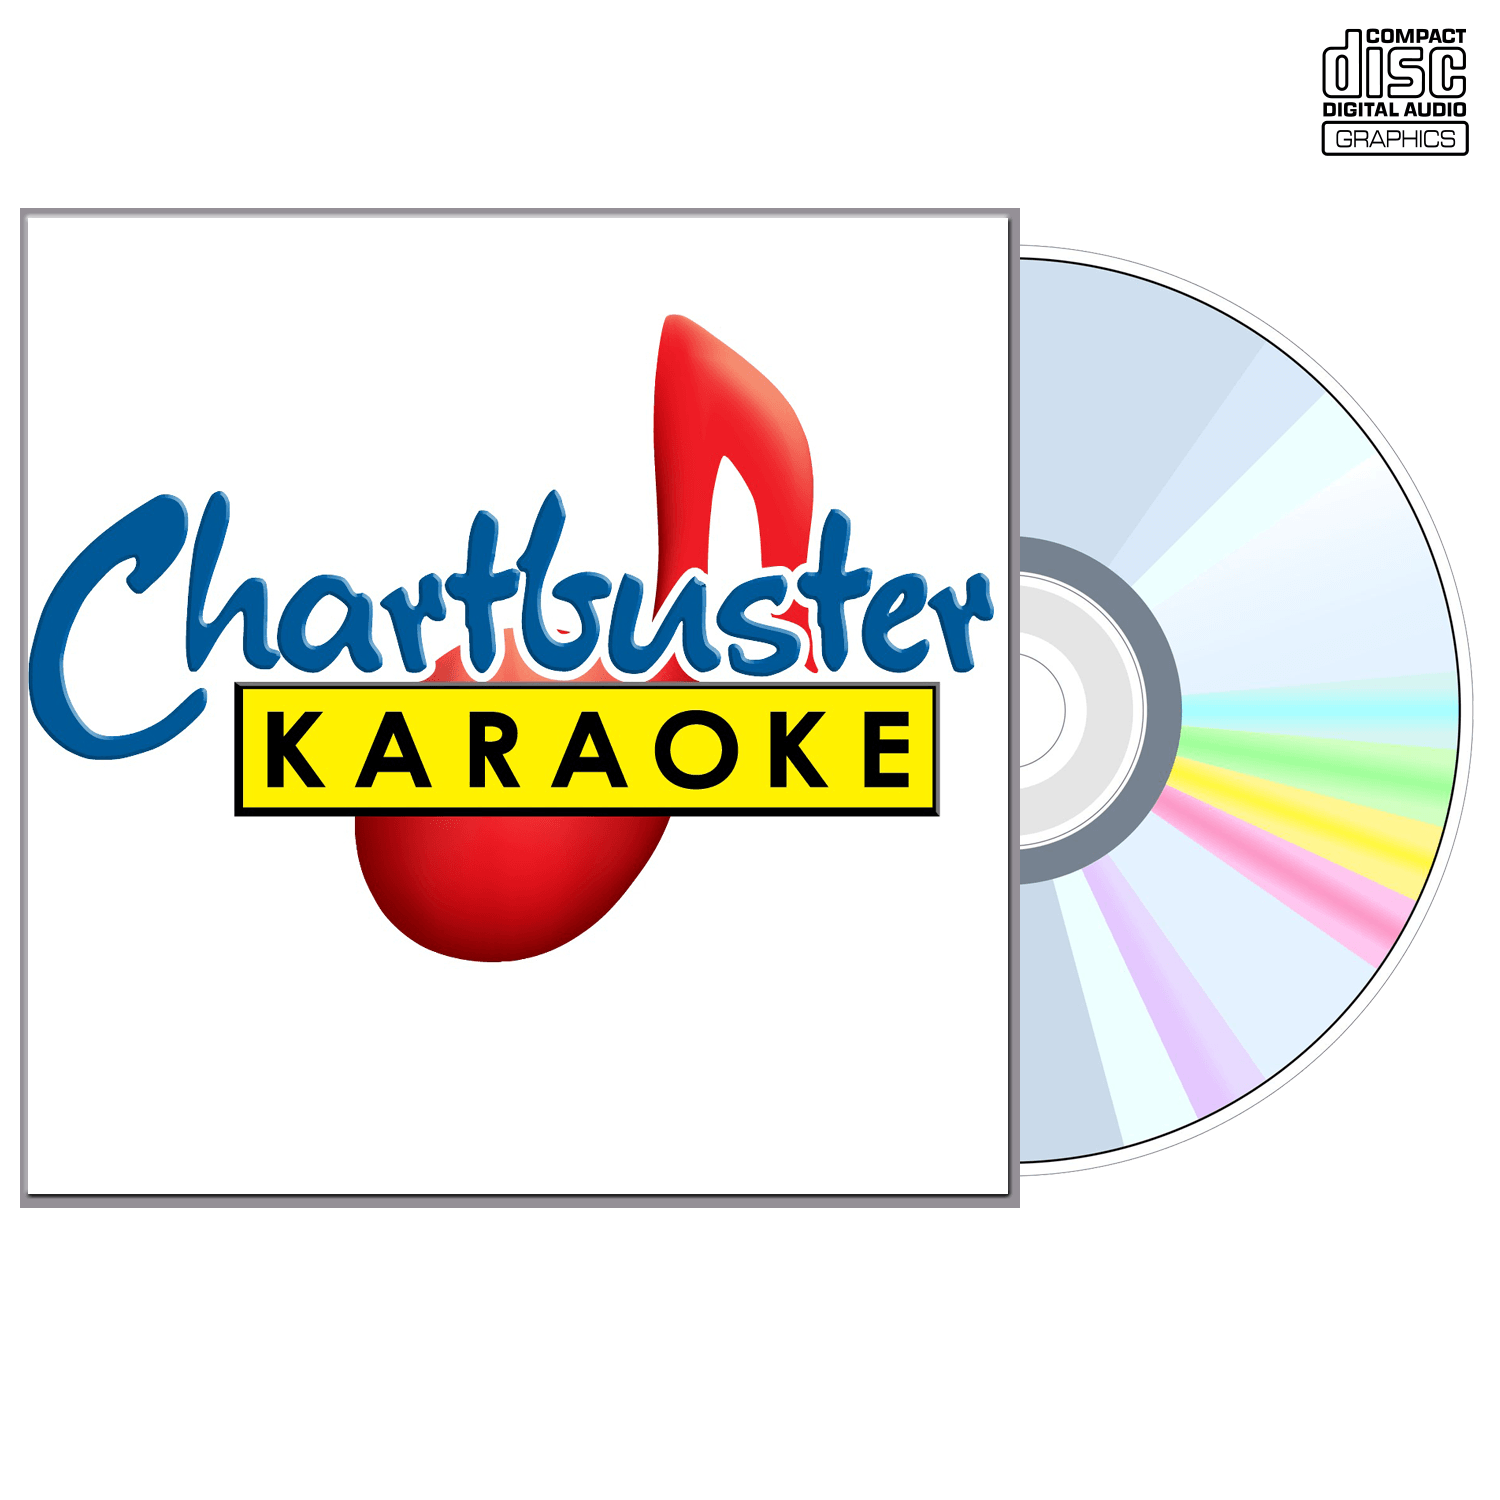 George Jones Vol 4 - CD+G - Chartbuster Karaoke - Karaoke Home Entertainment